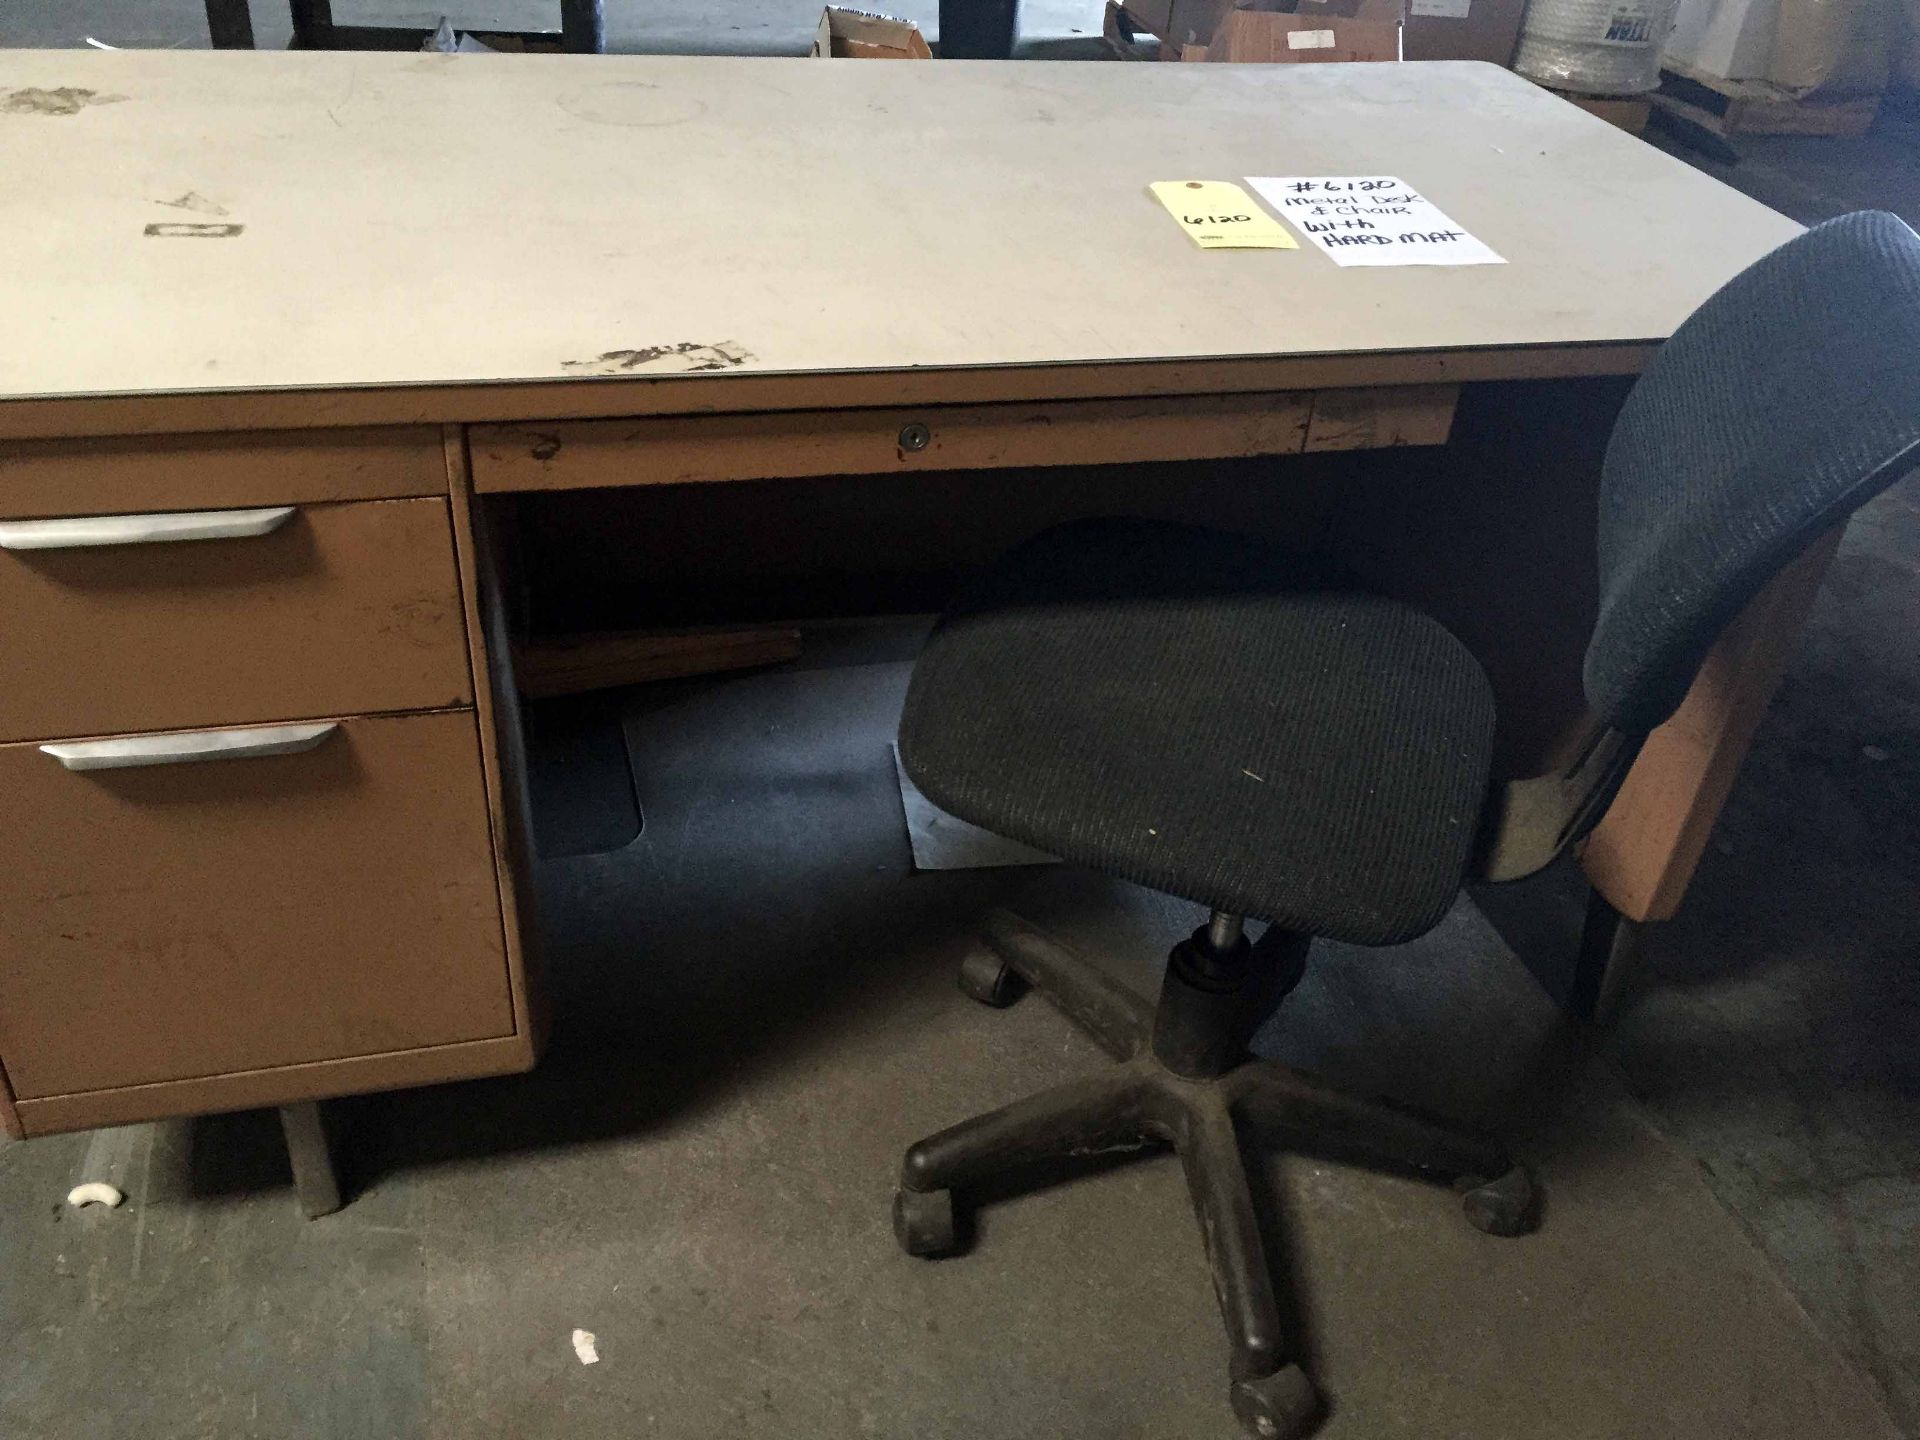 LOT OF OFFICE FURNITURE: metal desk, chair & hard mat LOCATED IN LONGVIEW, TX